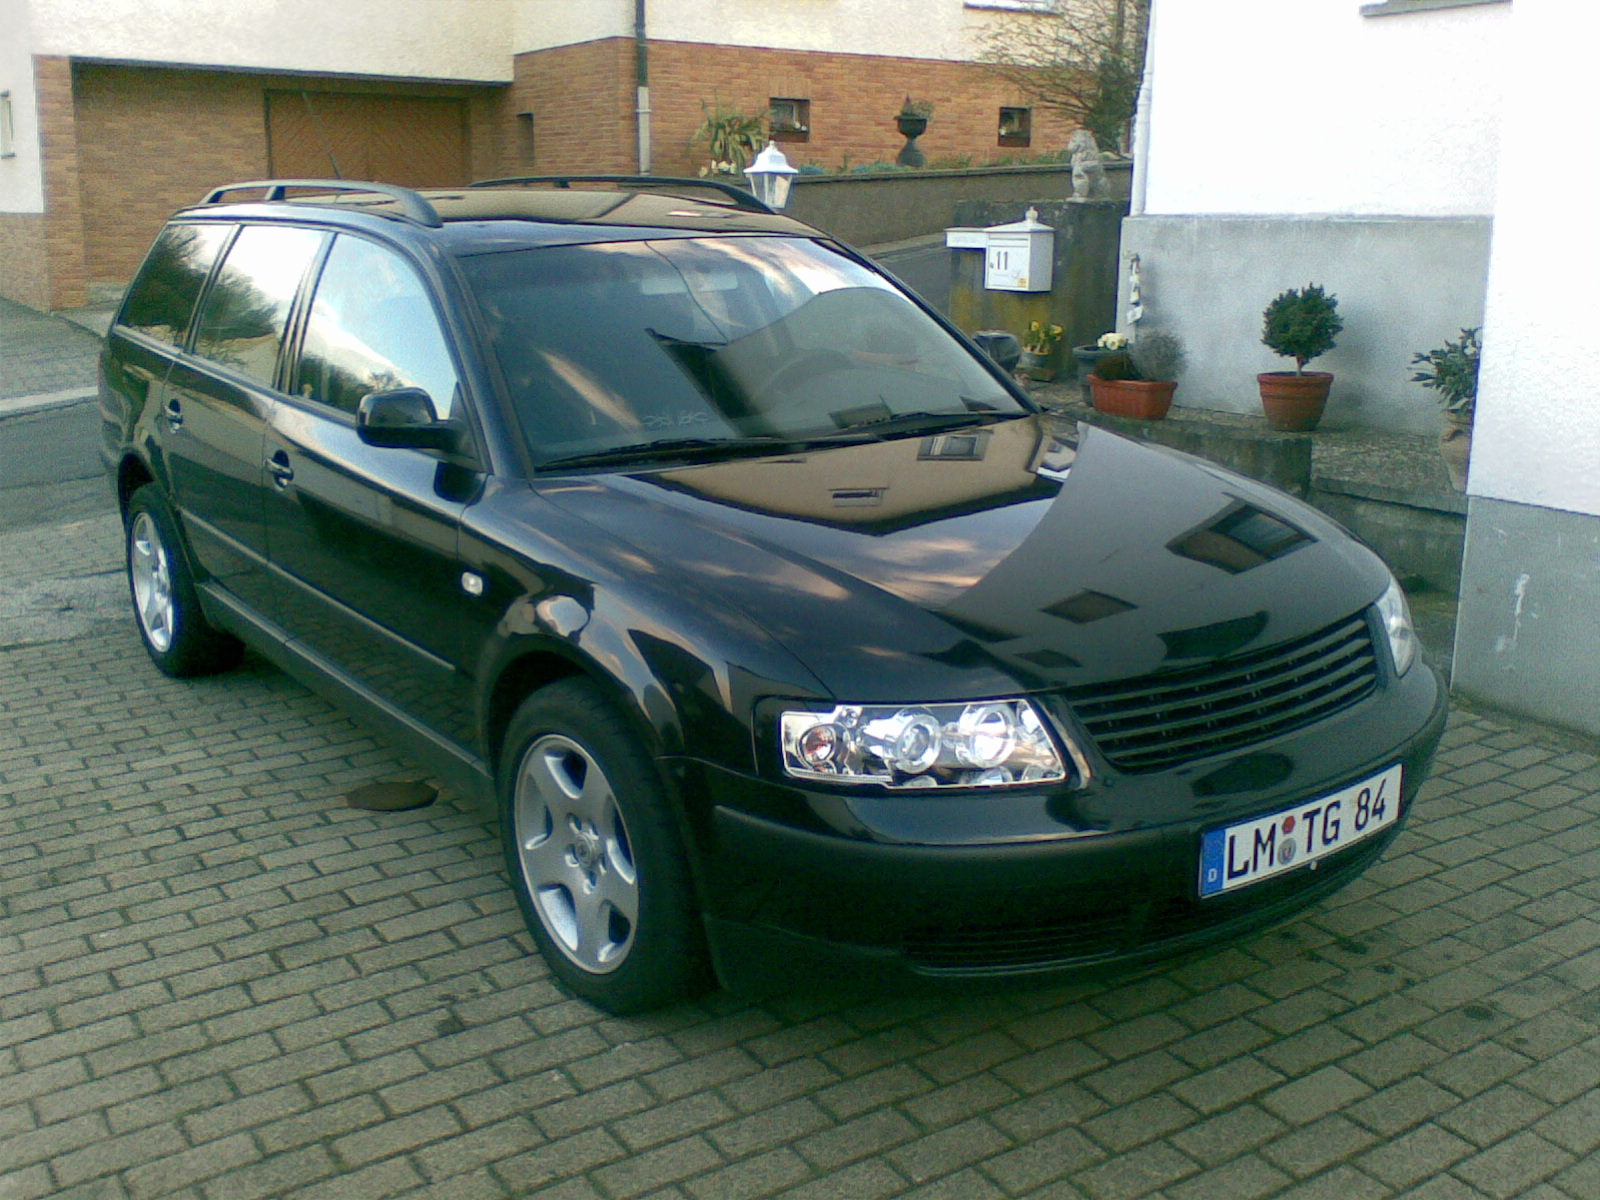 File:Volkswagen Passat B5 front 20070323.jpg - Wikipedia